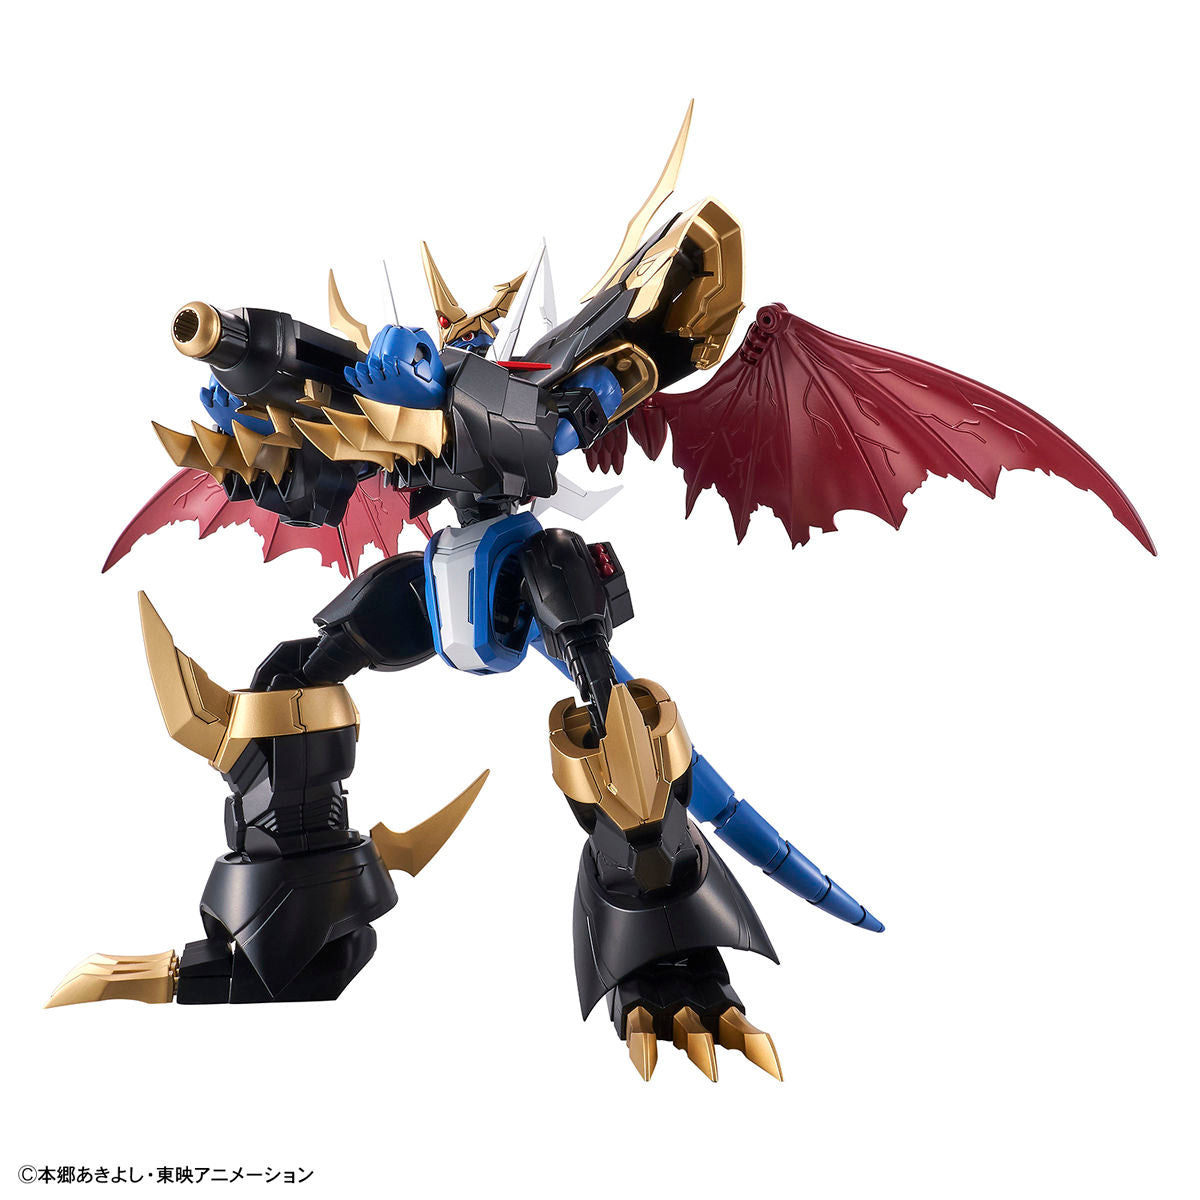 Figure-rise Standard - Digimon - [Amplified] Imperialdramon